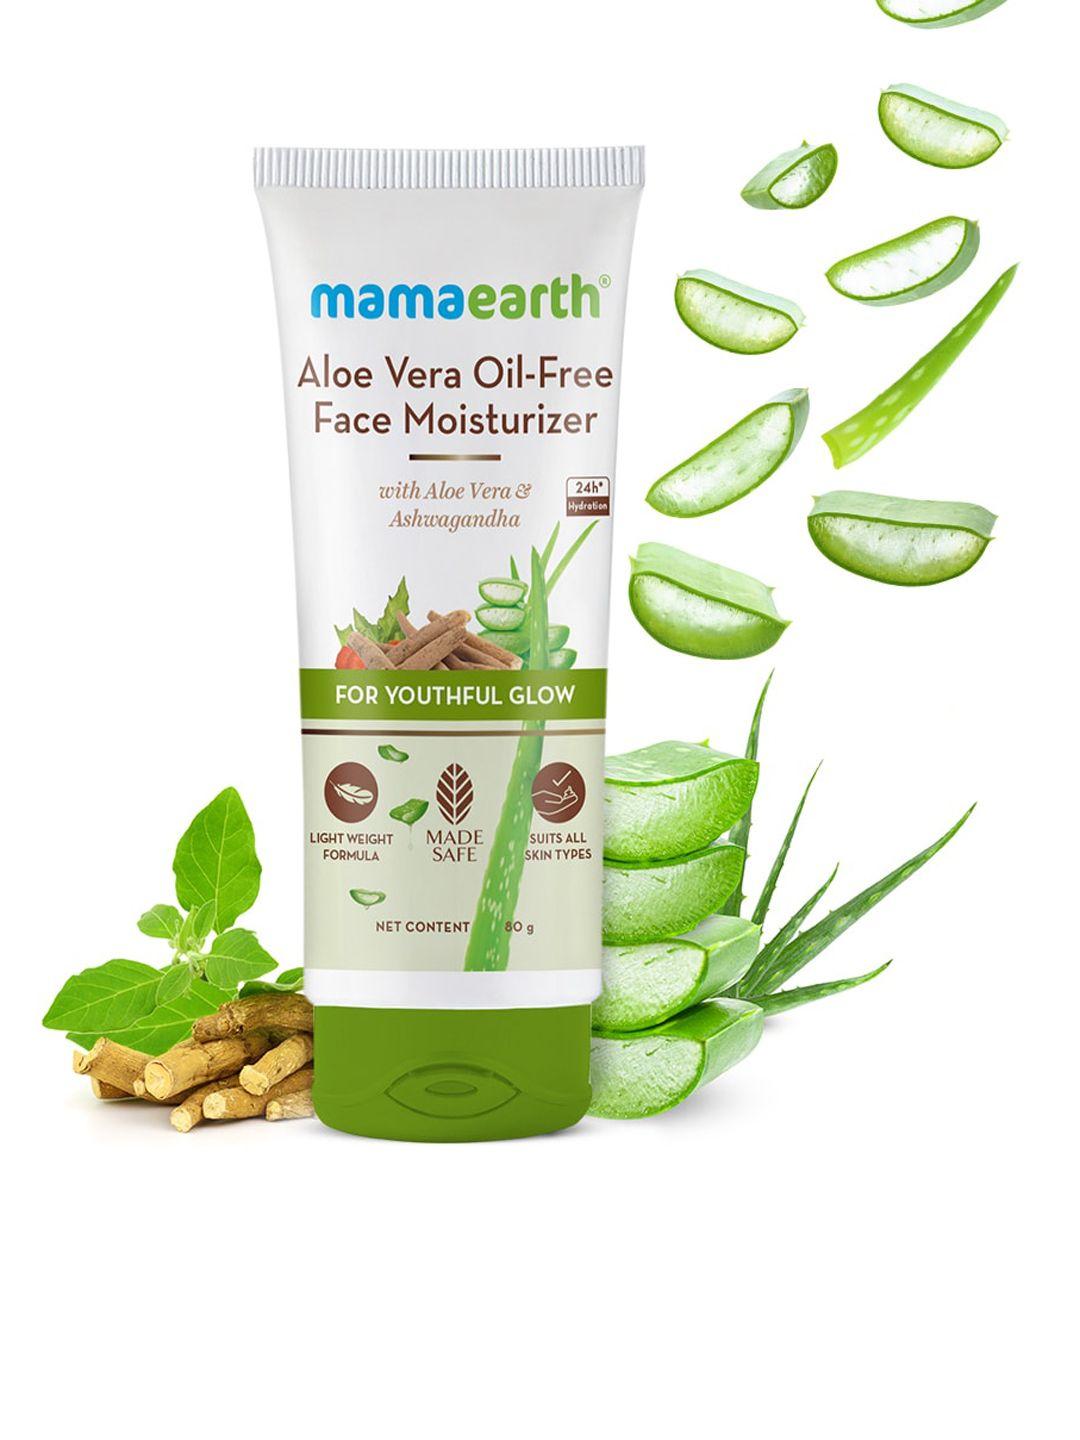 mamaearth aloe vera oil-free face moisturizer with ashwagandha 80 g